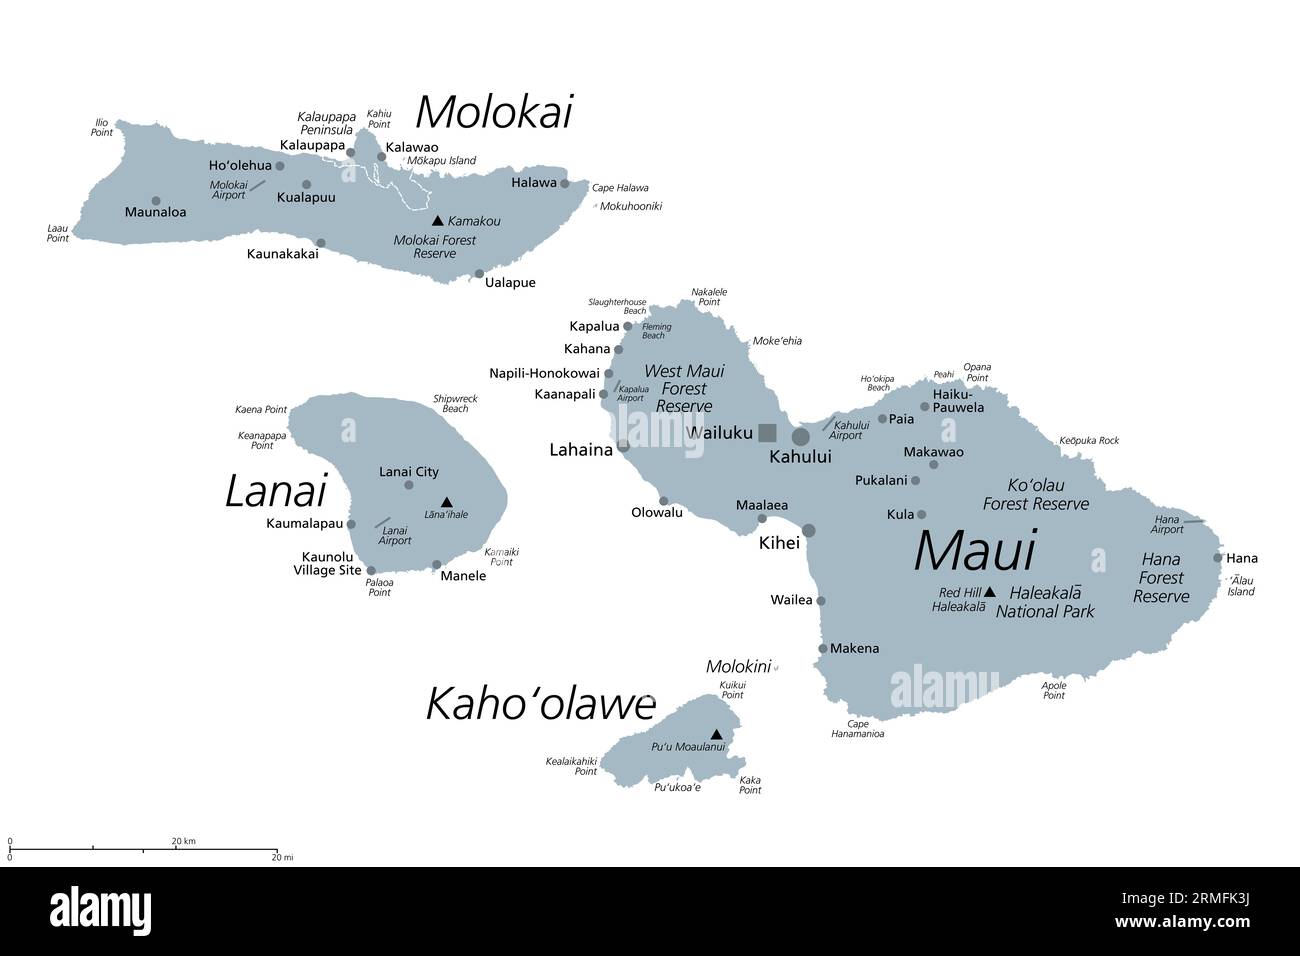 Contea di Maui nello stato degli Stati Uniti Hawaii, mappa politica grigia con Wailuku come sede. Comprende le isole di Maui, Lanai, Molokai, Kahoolawe e Molokini. Foto Stock